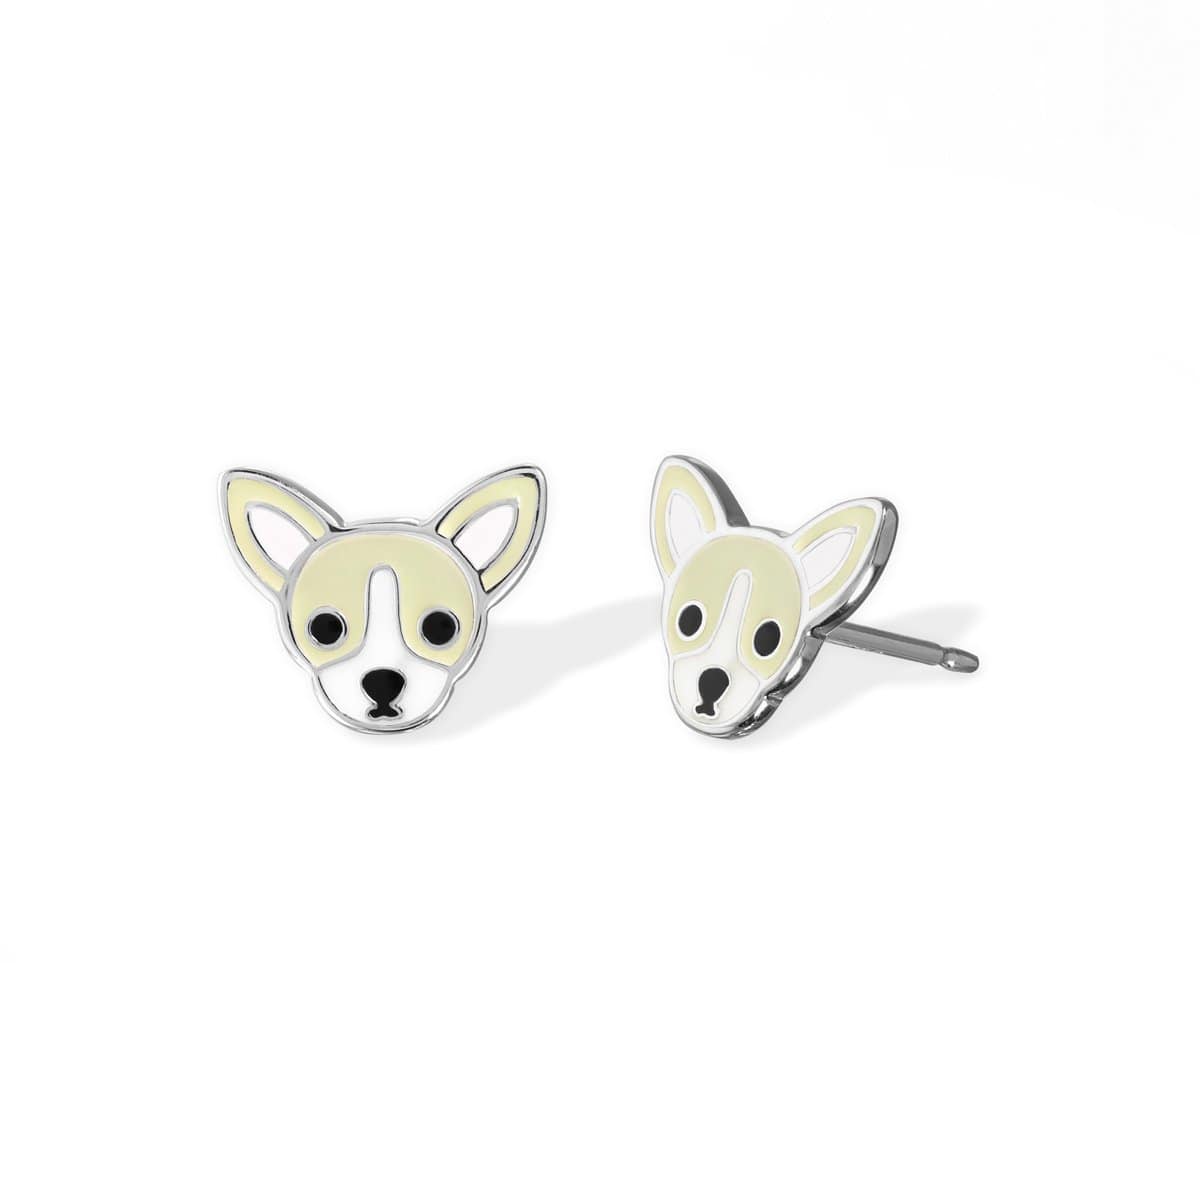 Boma Jewelry Earrings Chihuahua Dog Studs